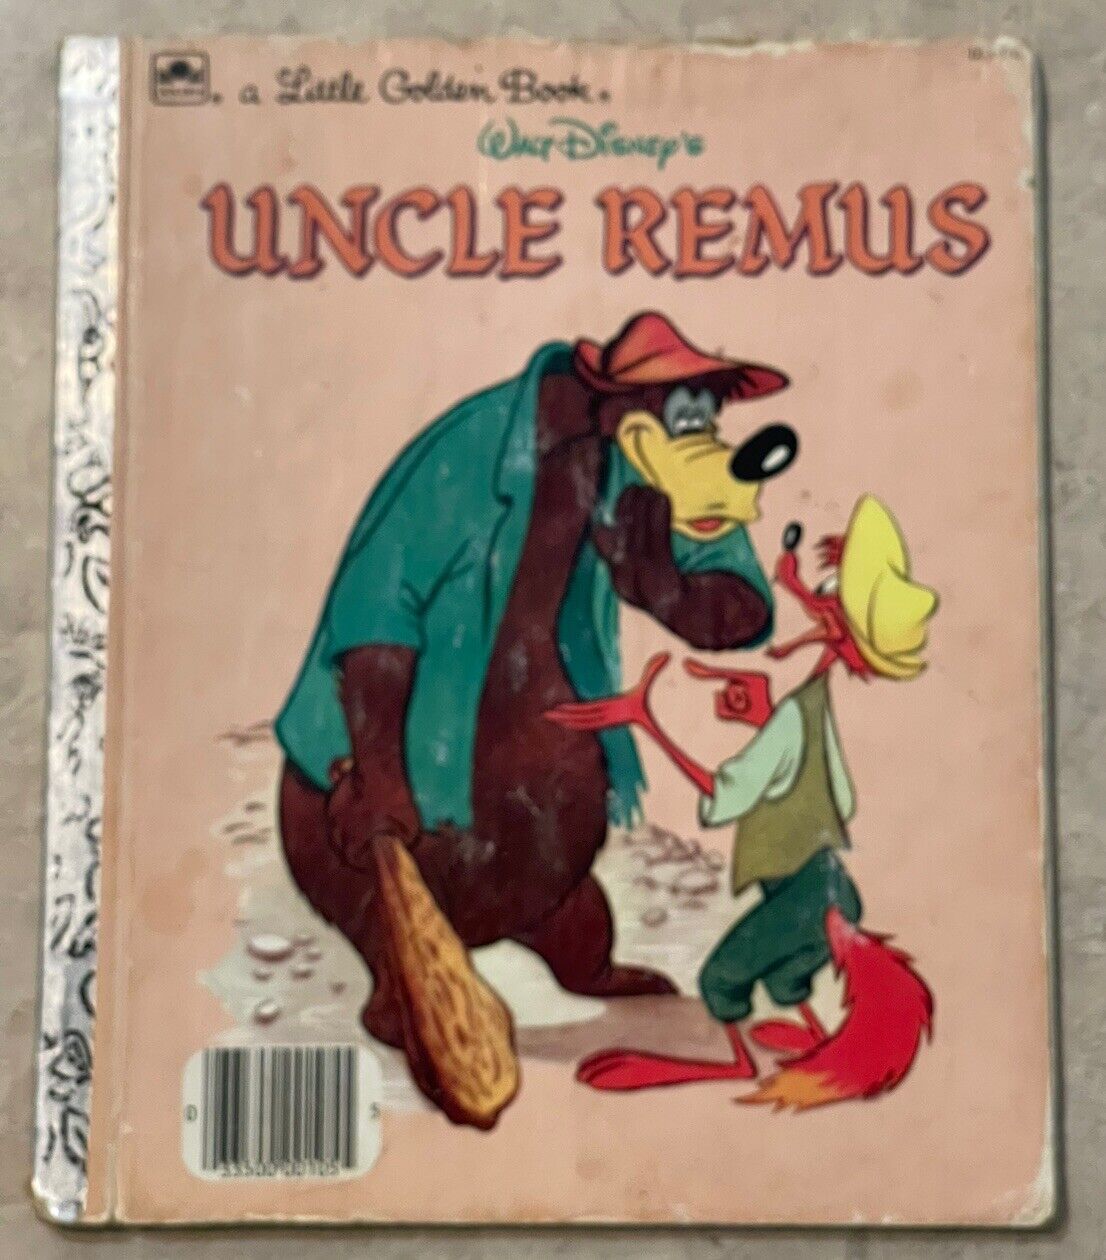 VTG 1986 A Little Golden Book Walt Disney’s Uncle Remus Hardcover